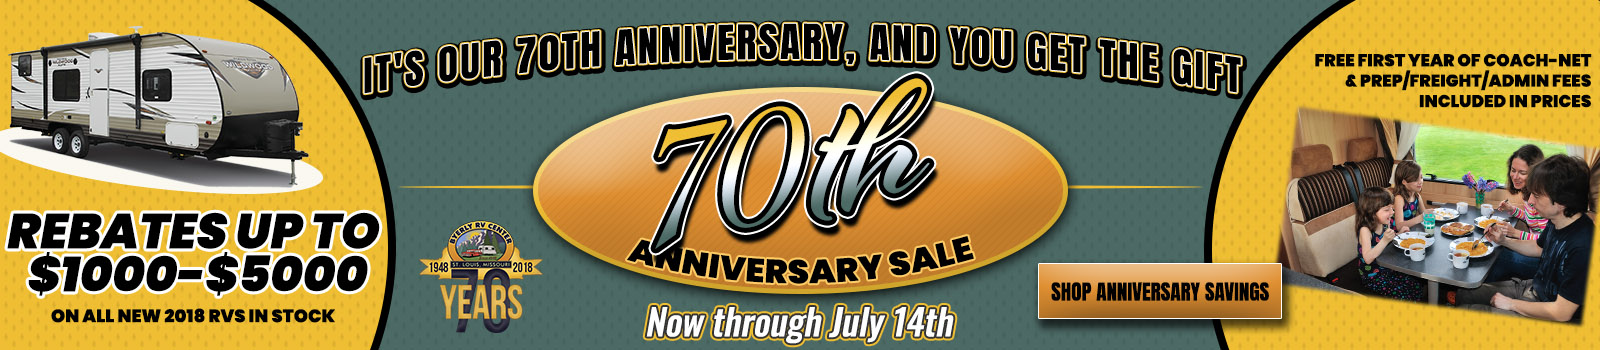 Byerly RV 70th Anniversary Sale RV Rebates